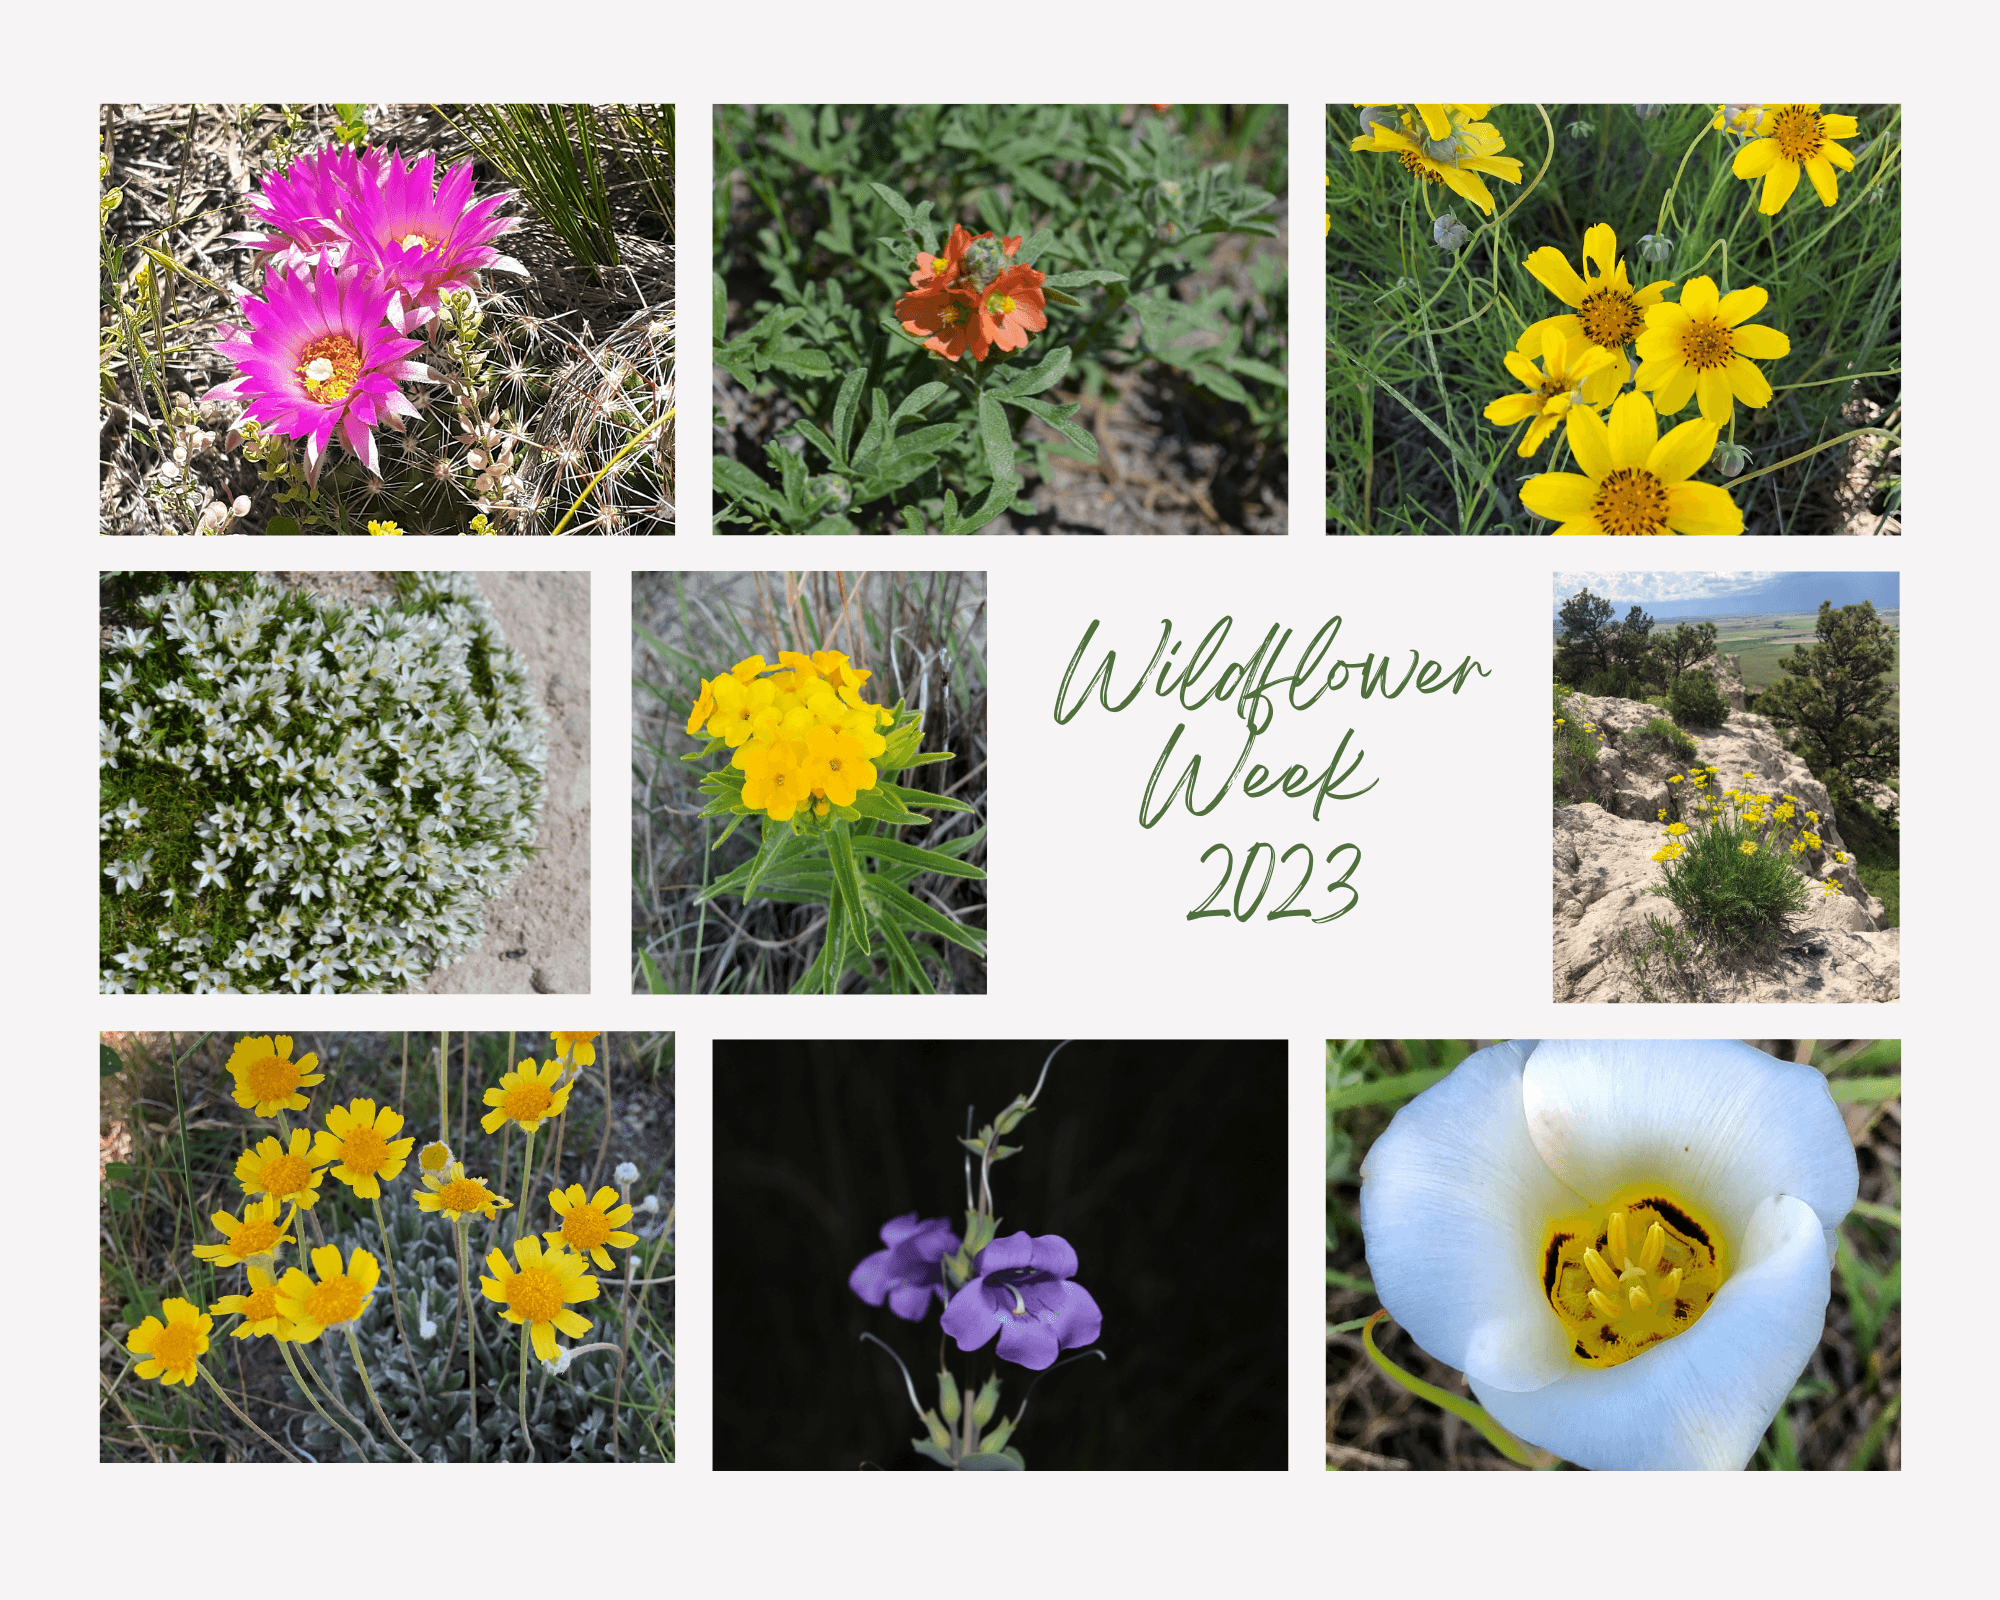 Wildflower Week 2023 is a Wrap